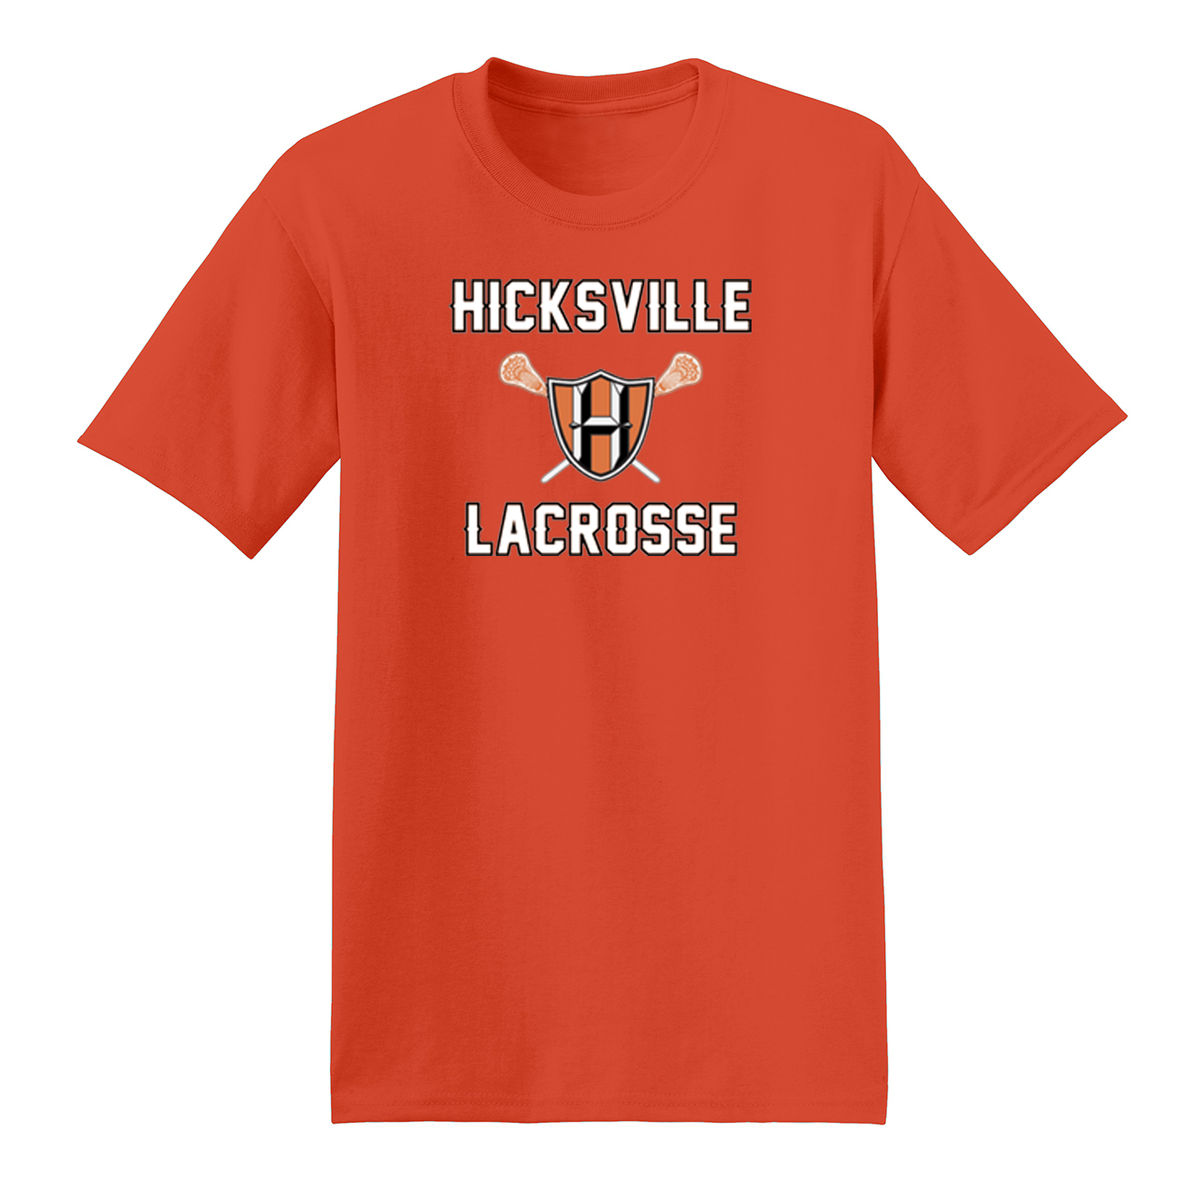 Hicksville Lacrosse T-Shirt